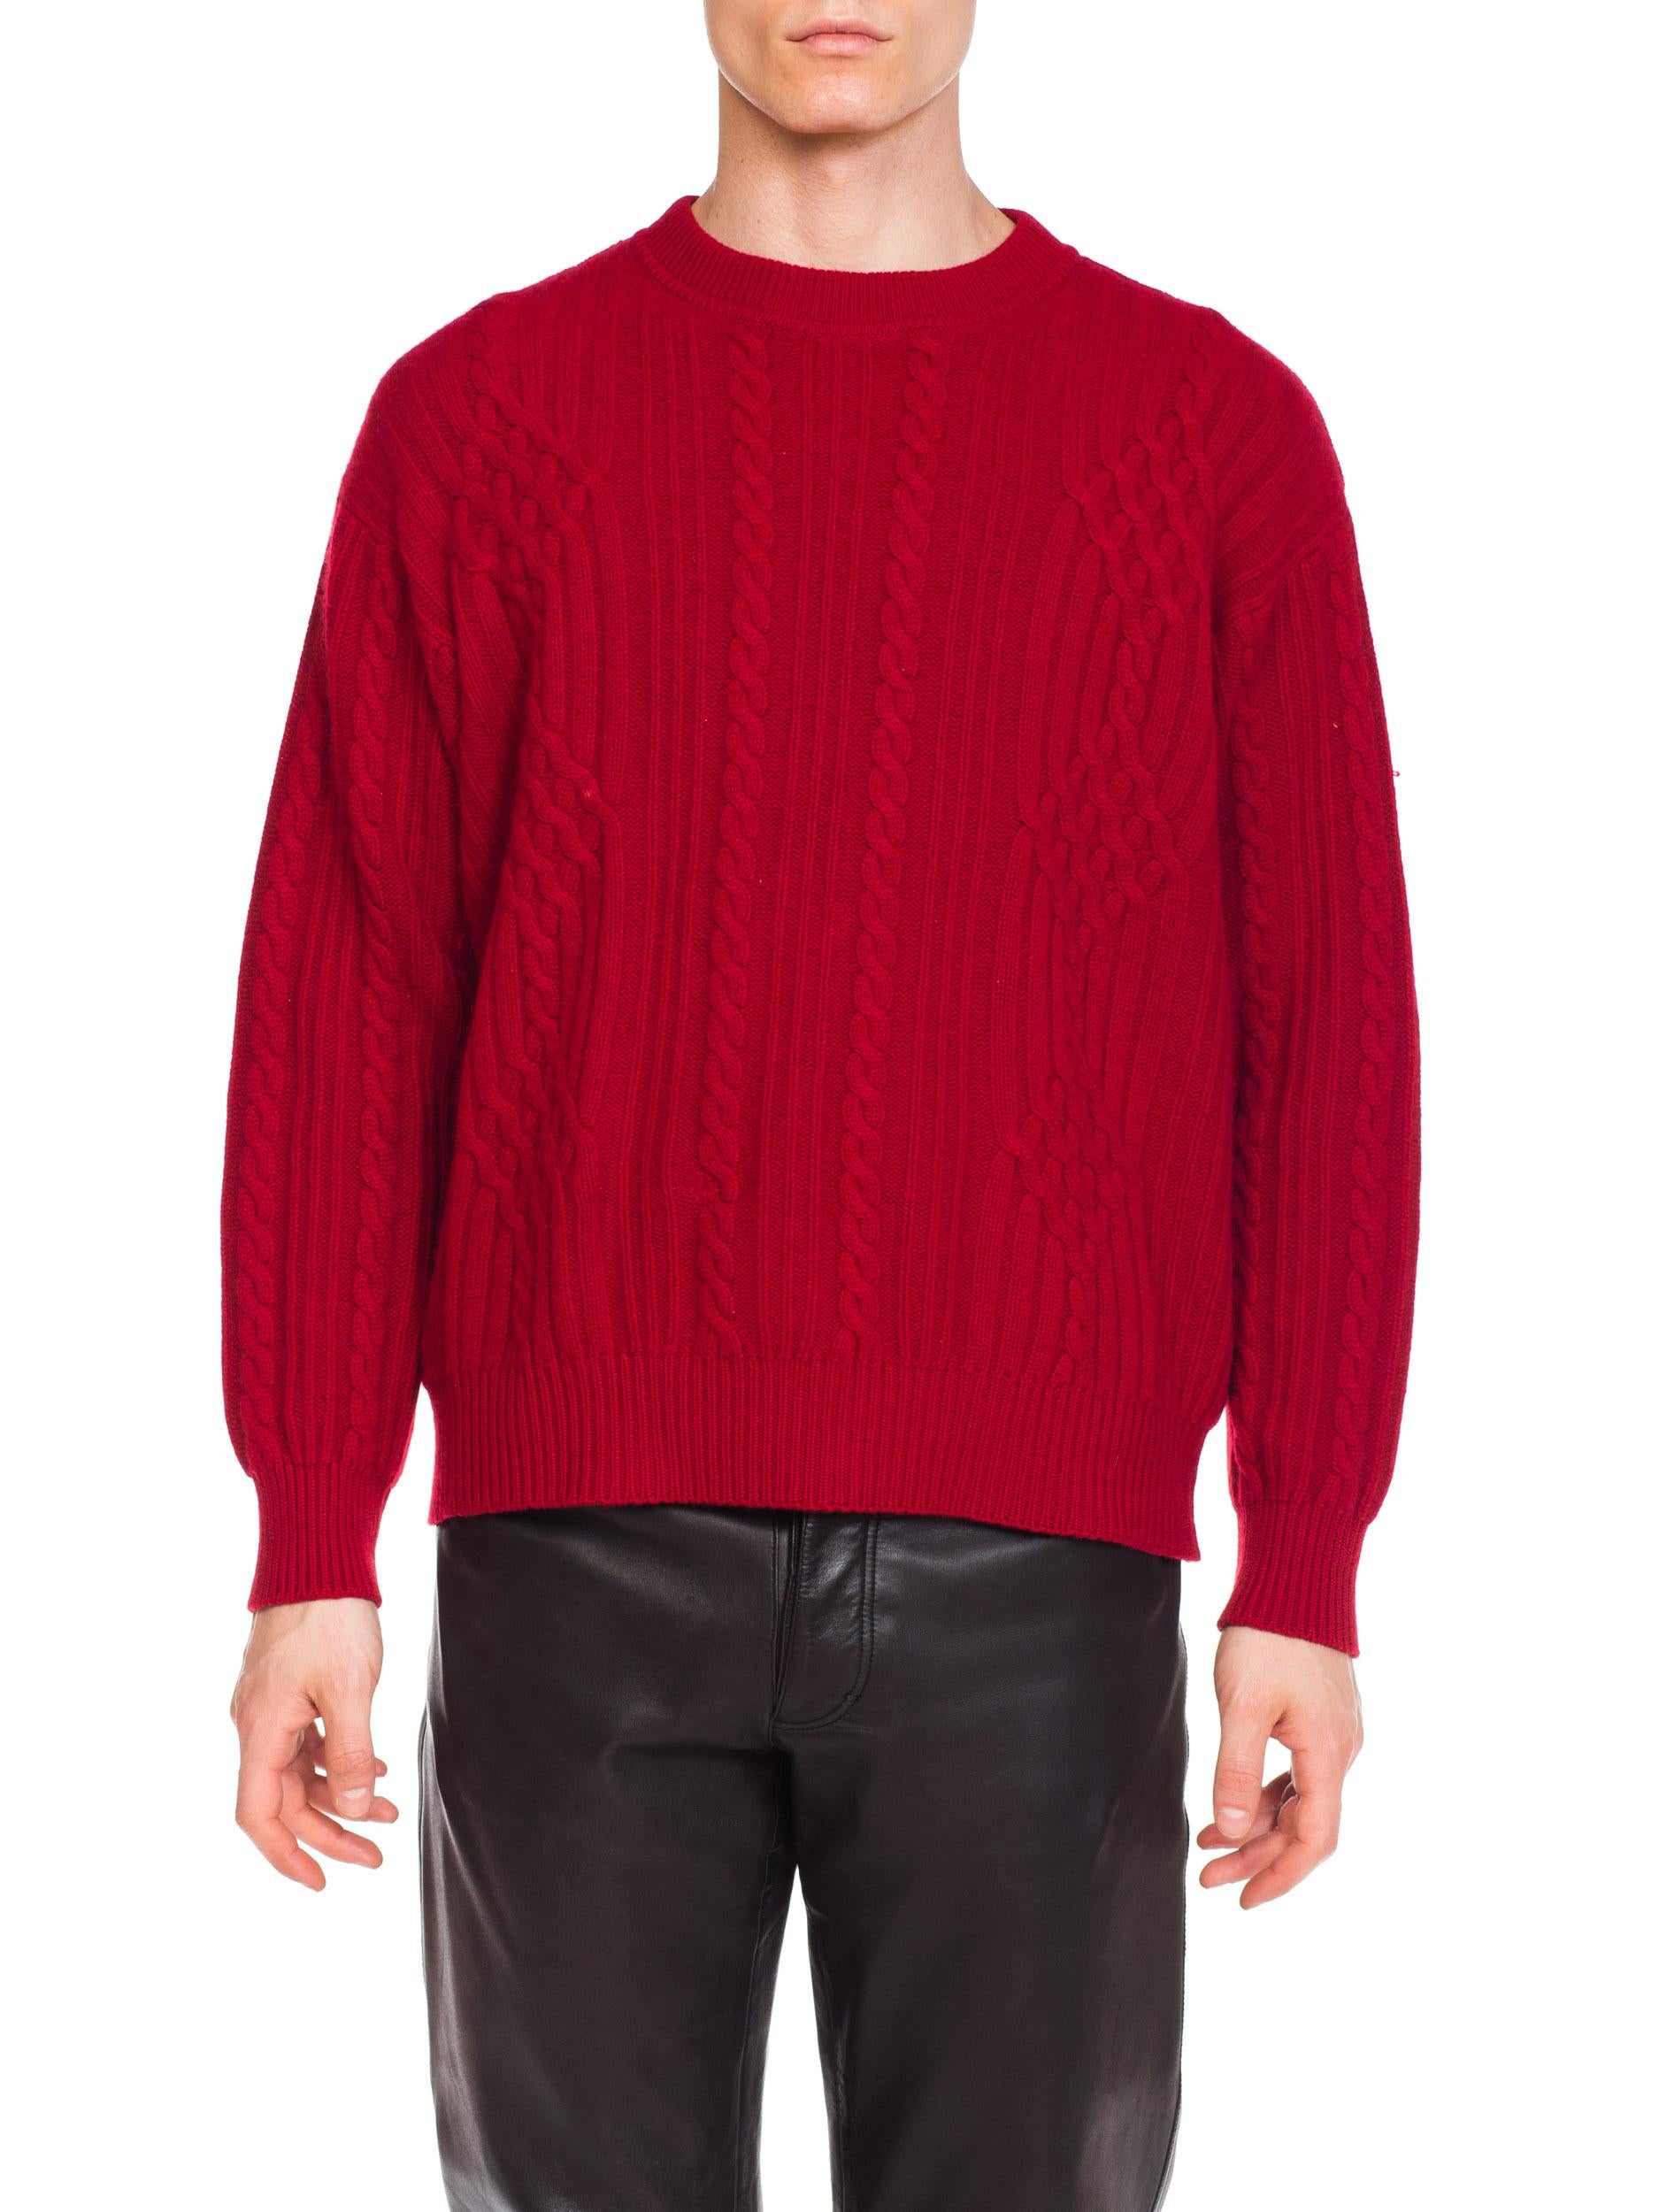 1980s Gucci Men's Cashmere Sweater 7